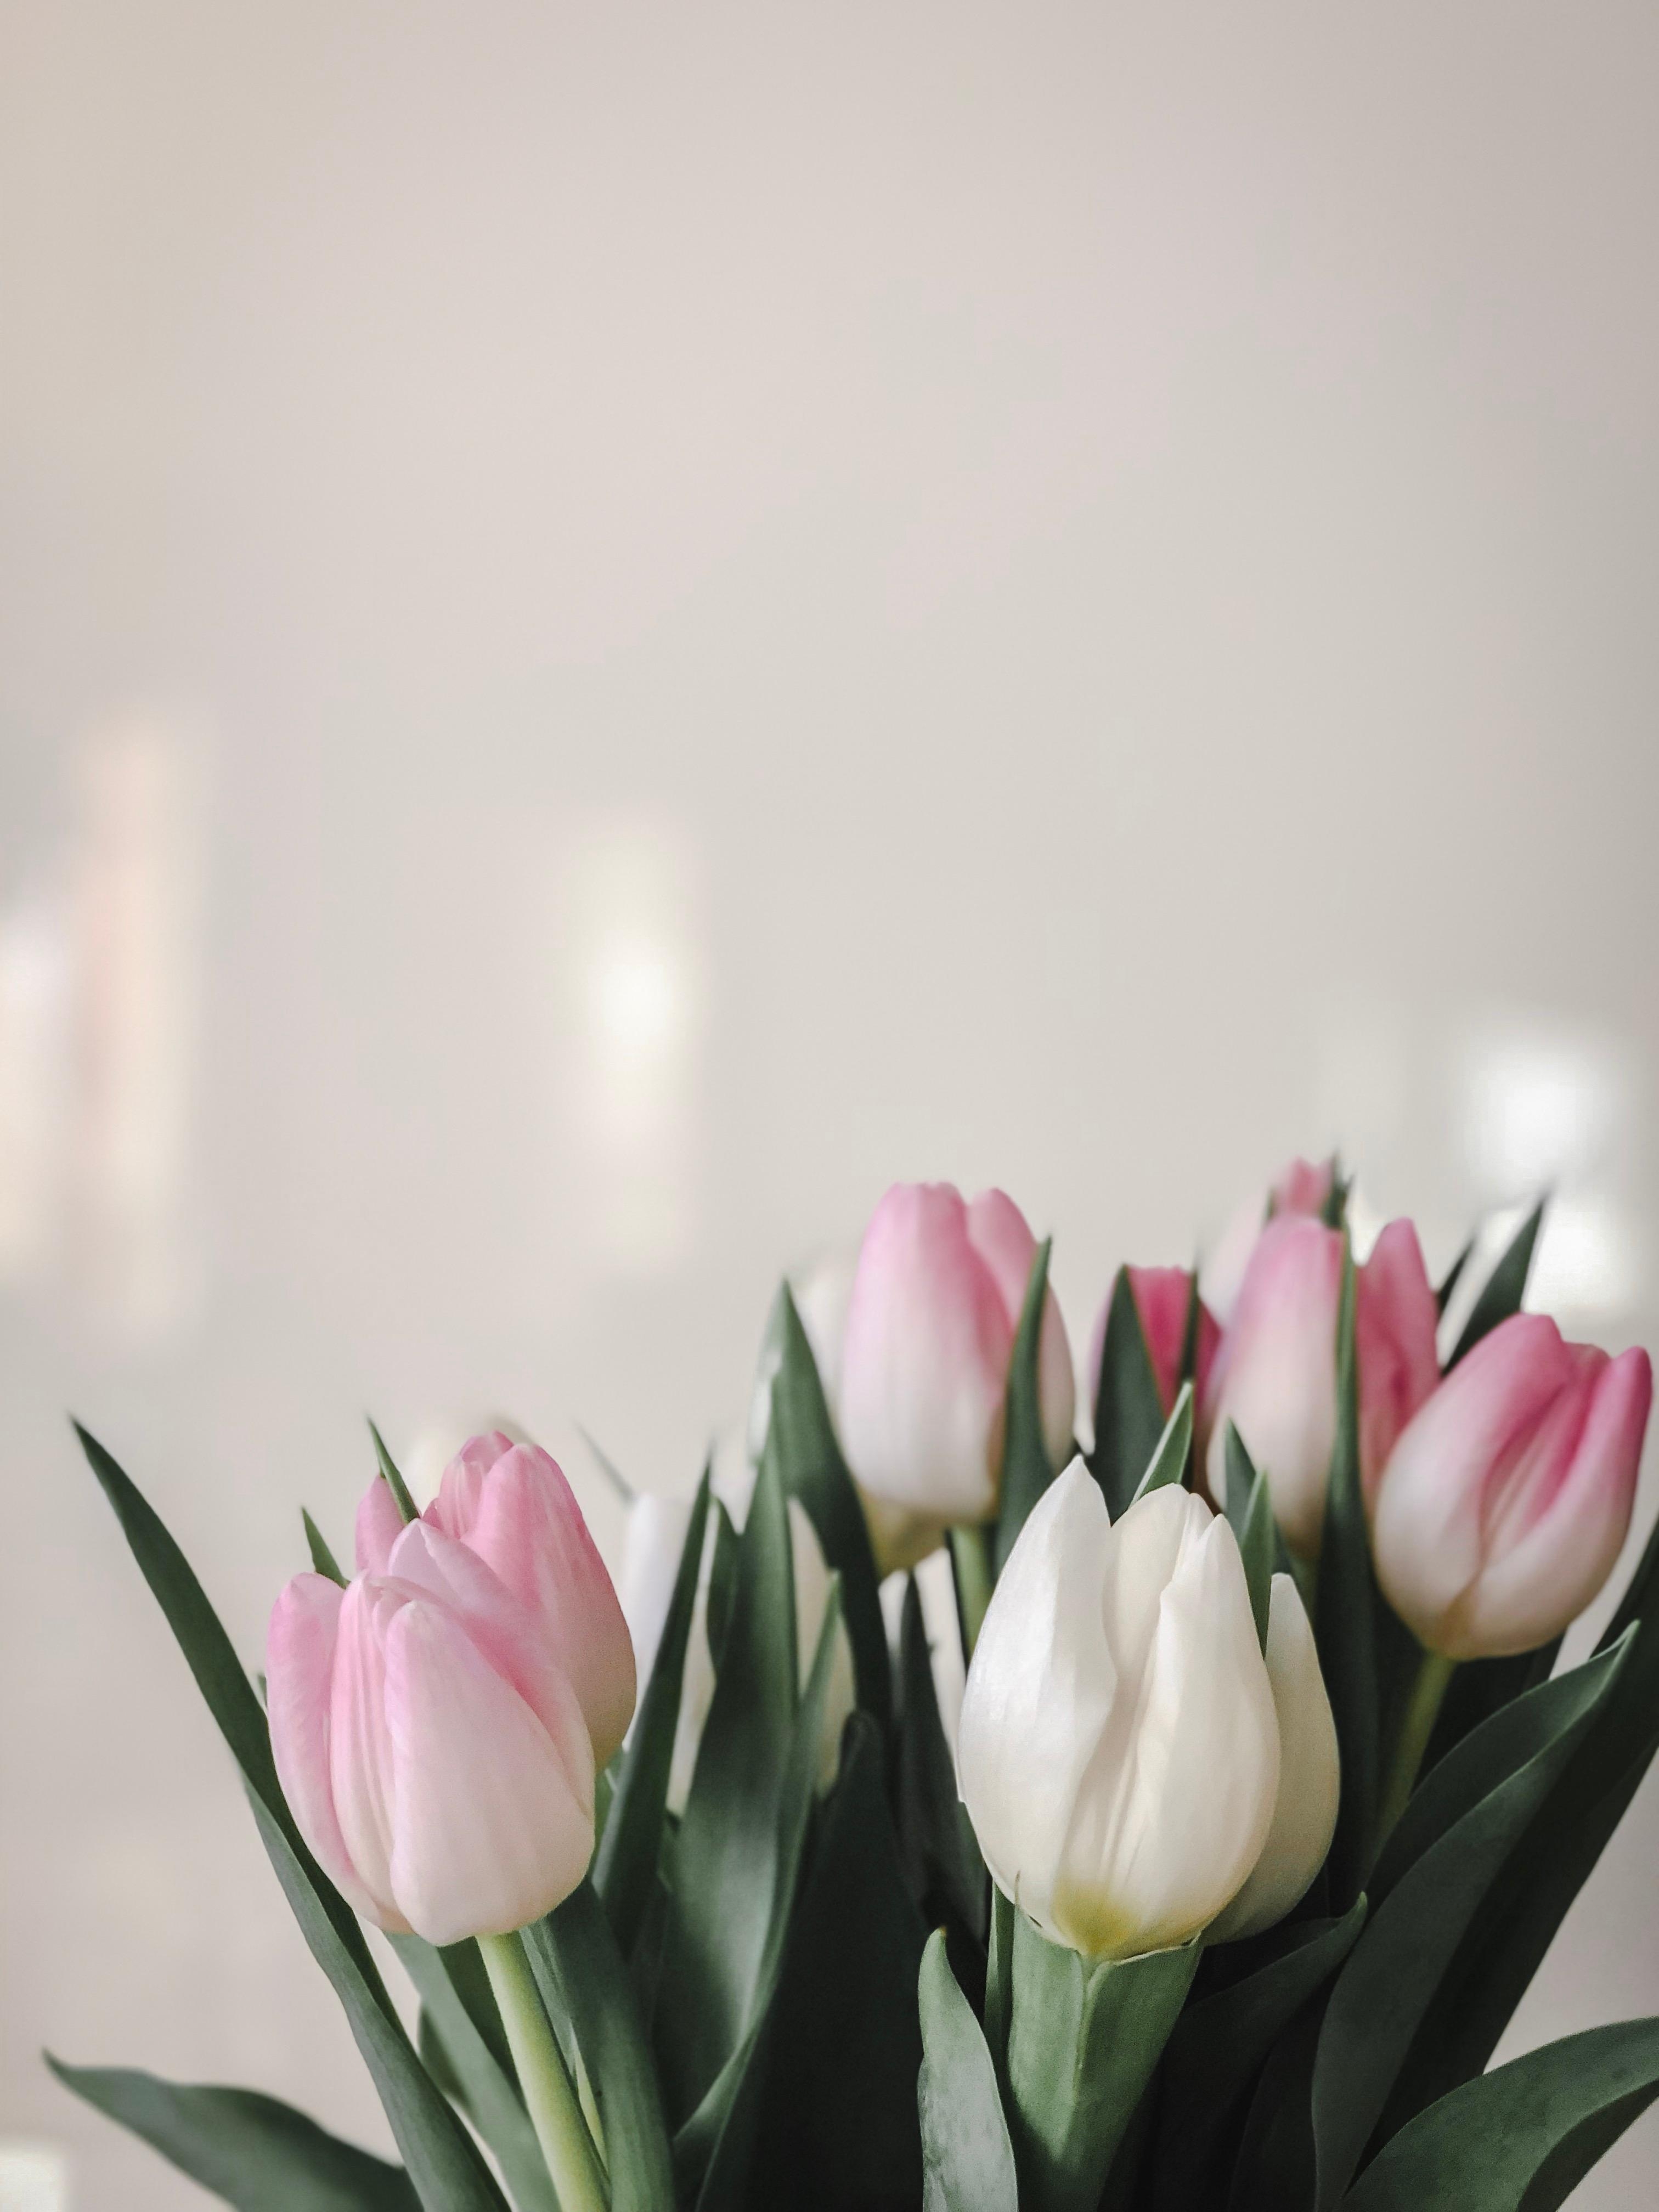 Blumengrüße #tulpen #springiscoming #blumen #flowers #frischeblumen #decor